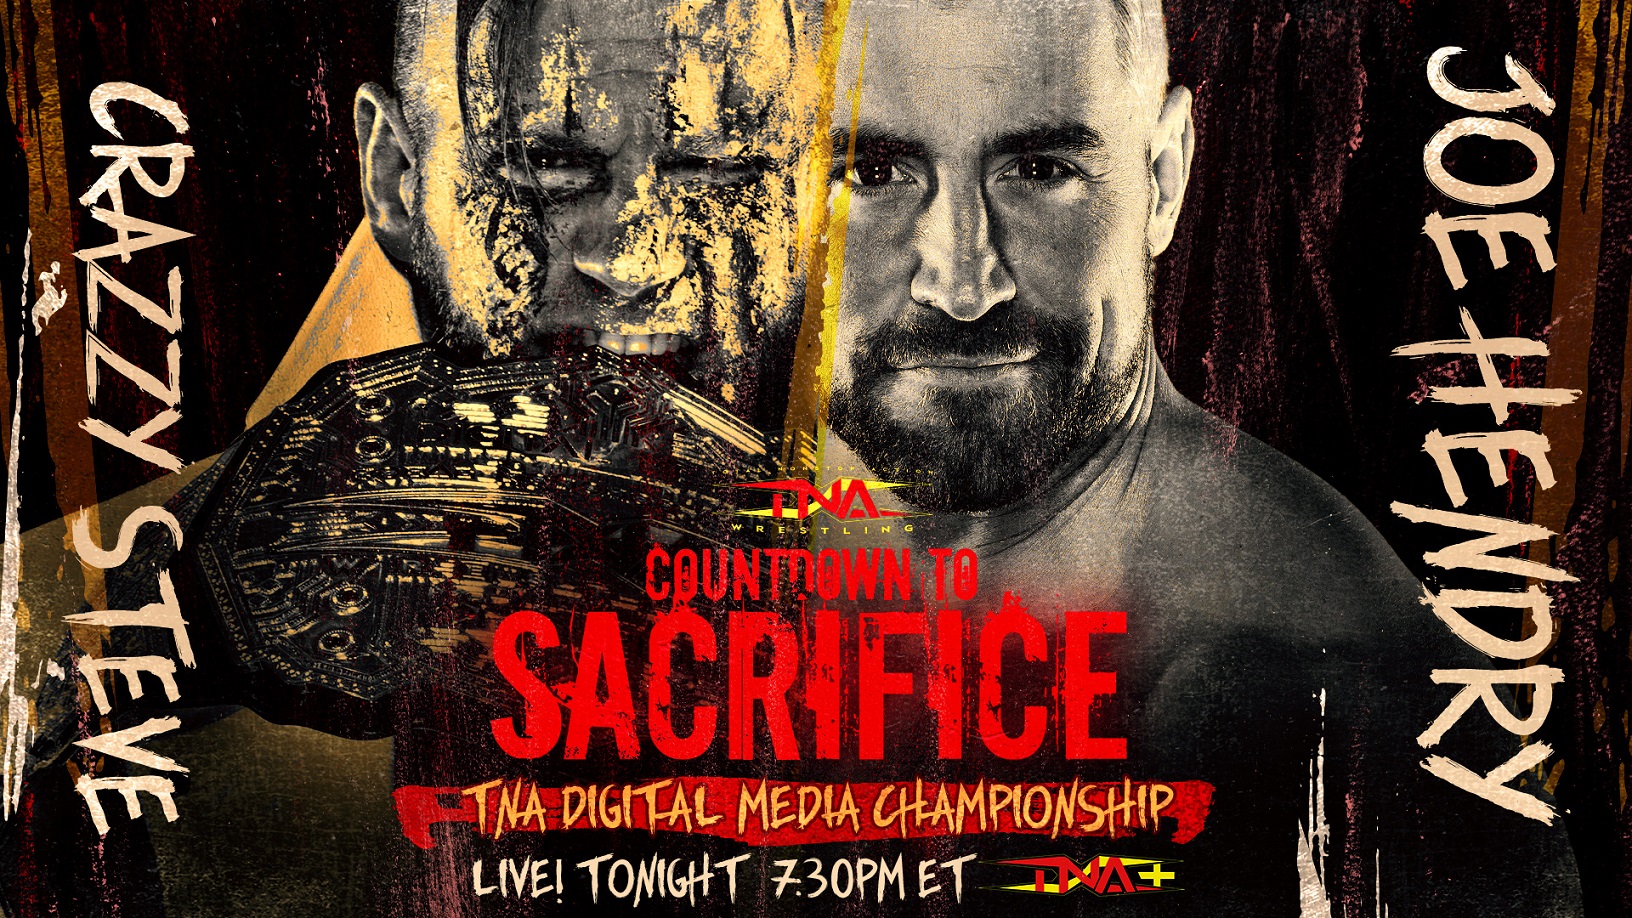 Joe Hendry Steps Up to Challenge Digital Media Champion Crazzy Steve on Countdown to Sacrifice – TNA Wrestling